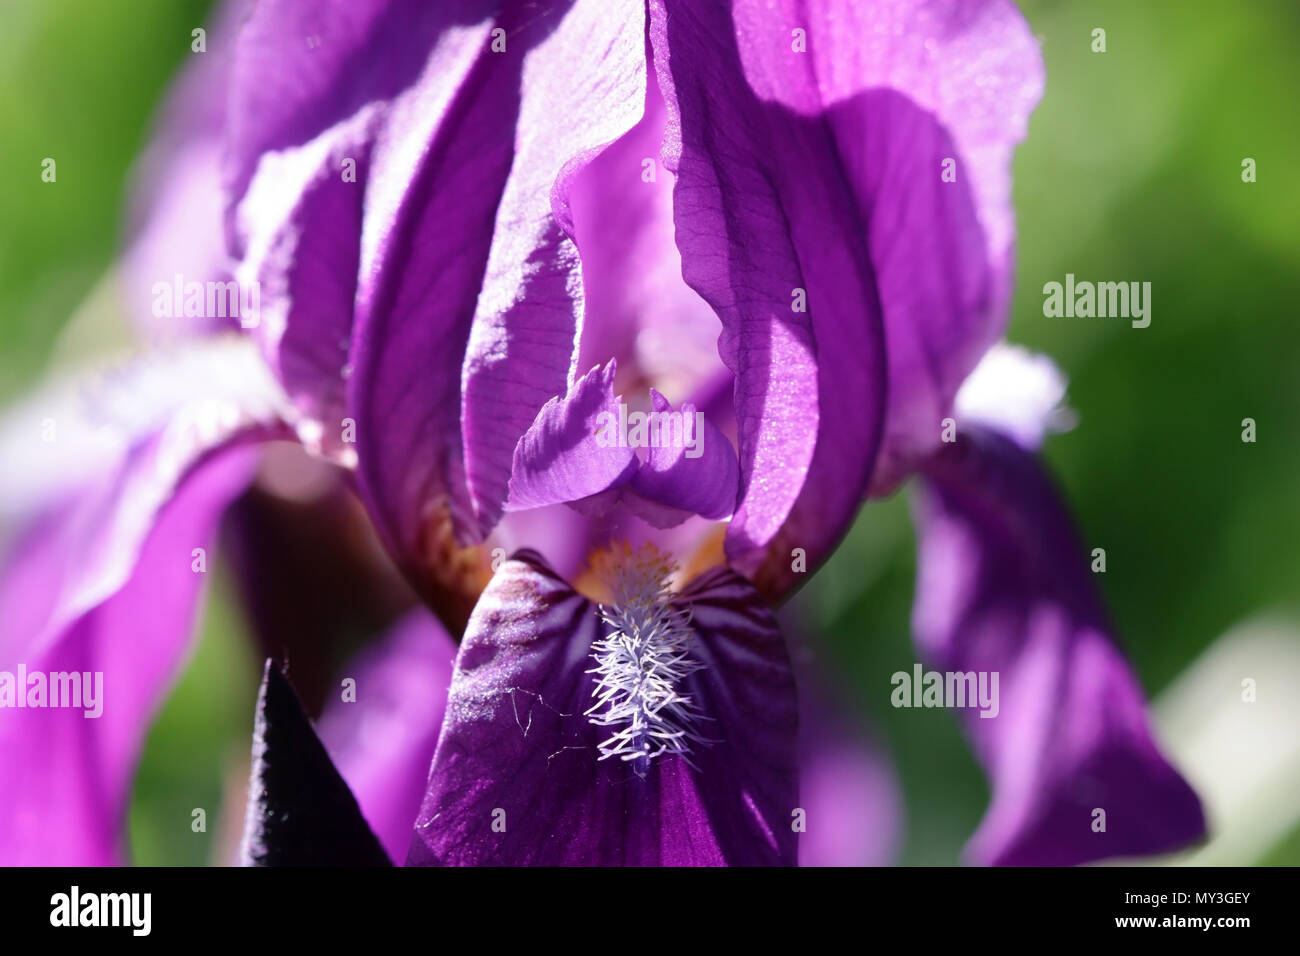 Iris violet on a blurring green vegetable background horizontally. Macro. Iridaceae Family. Stock Photo